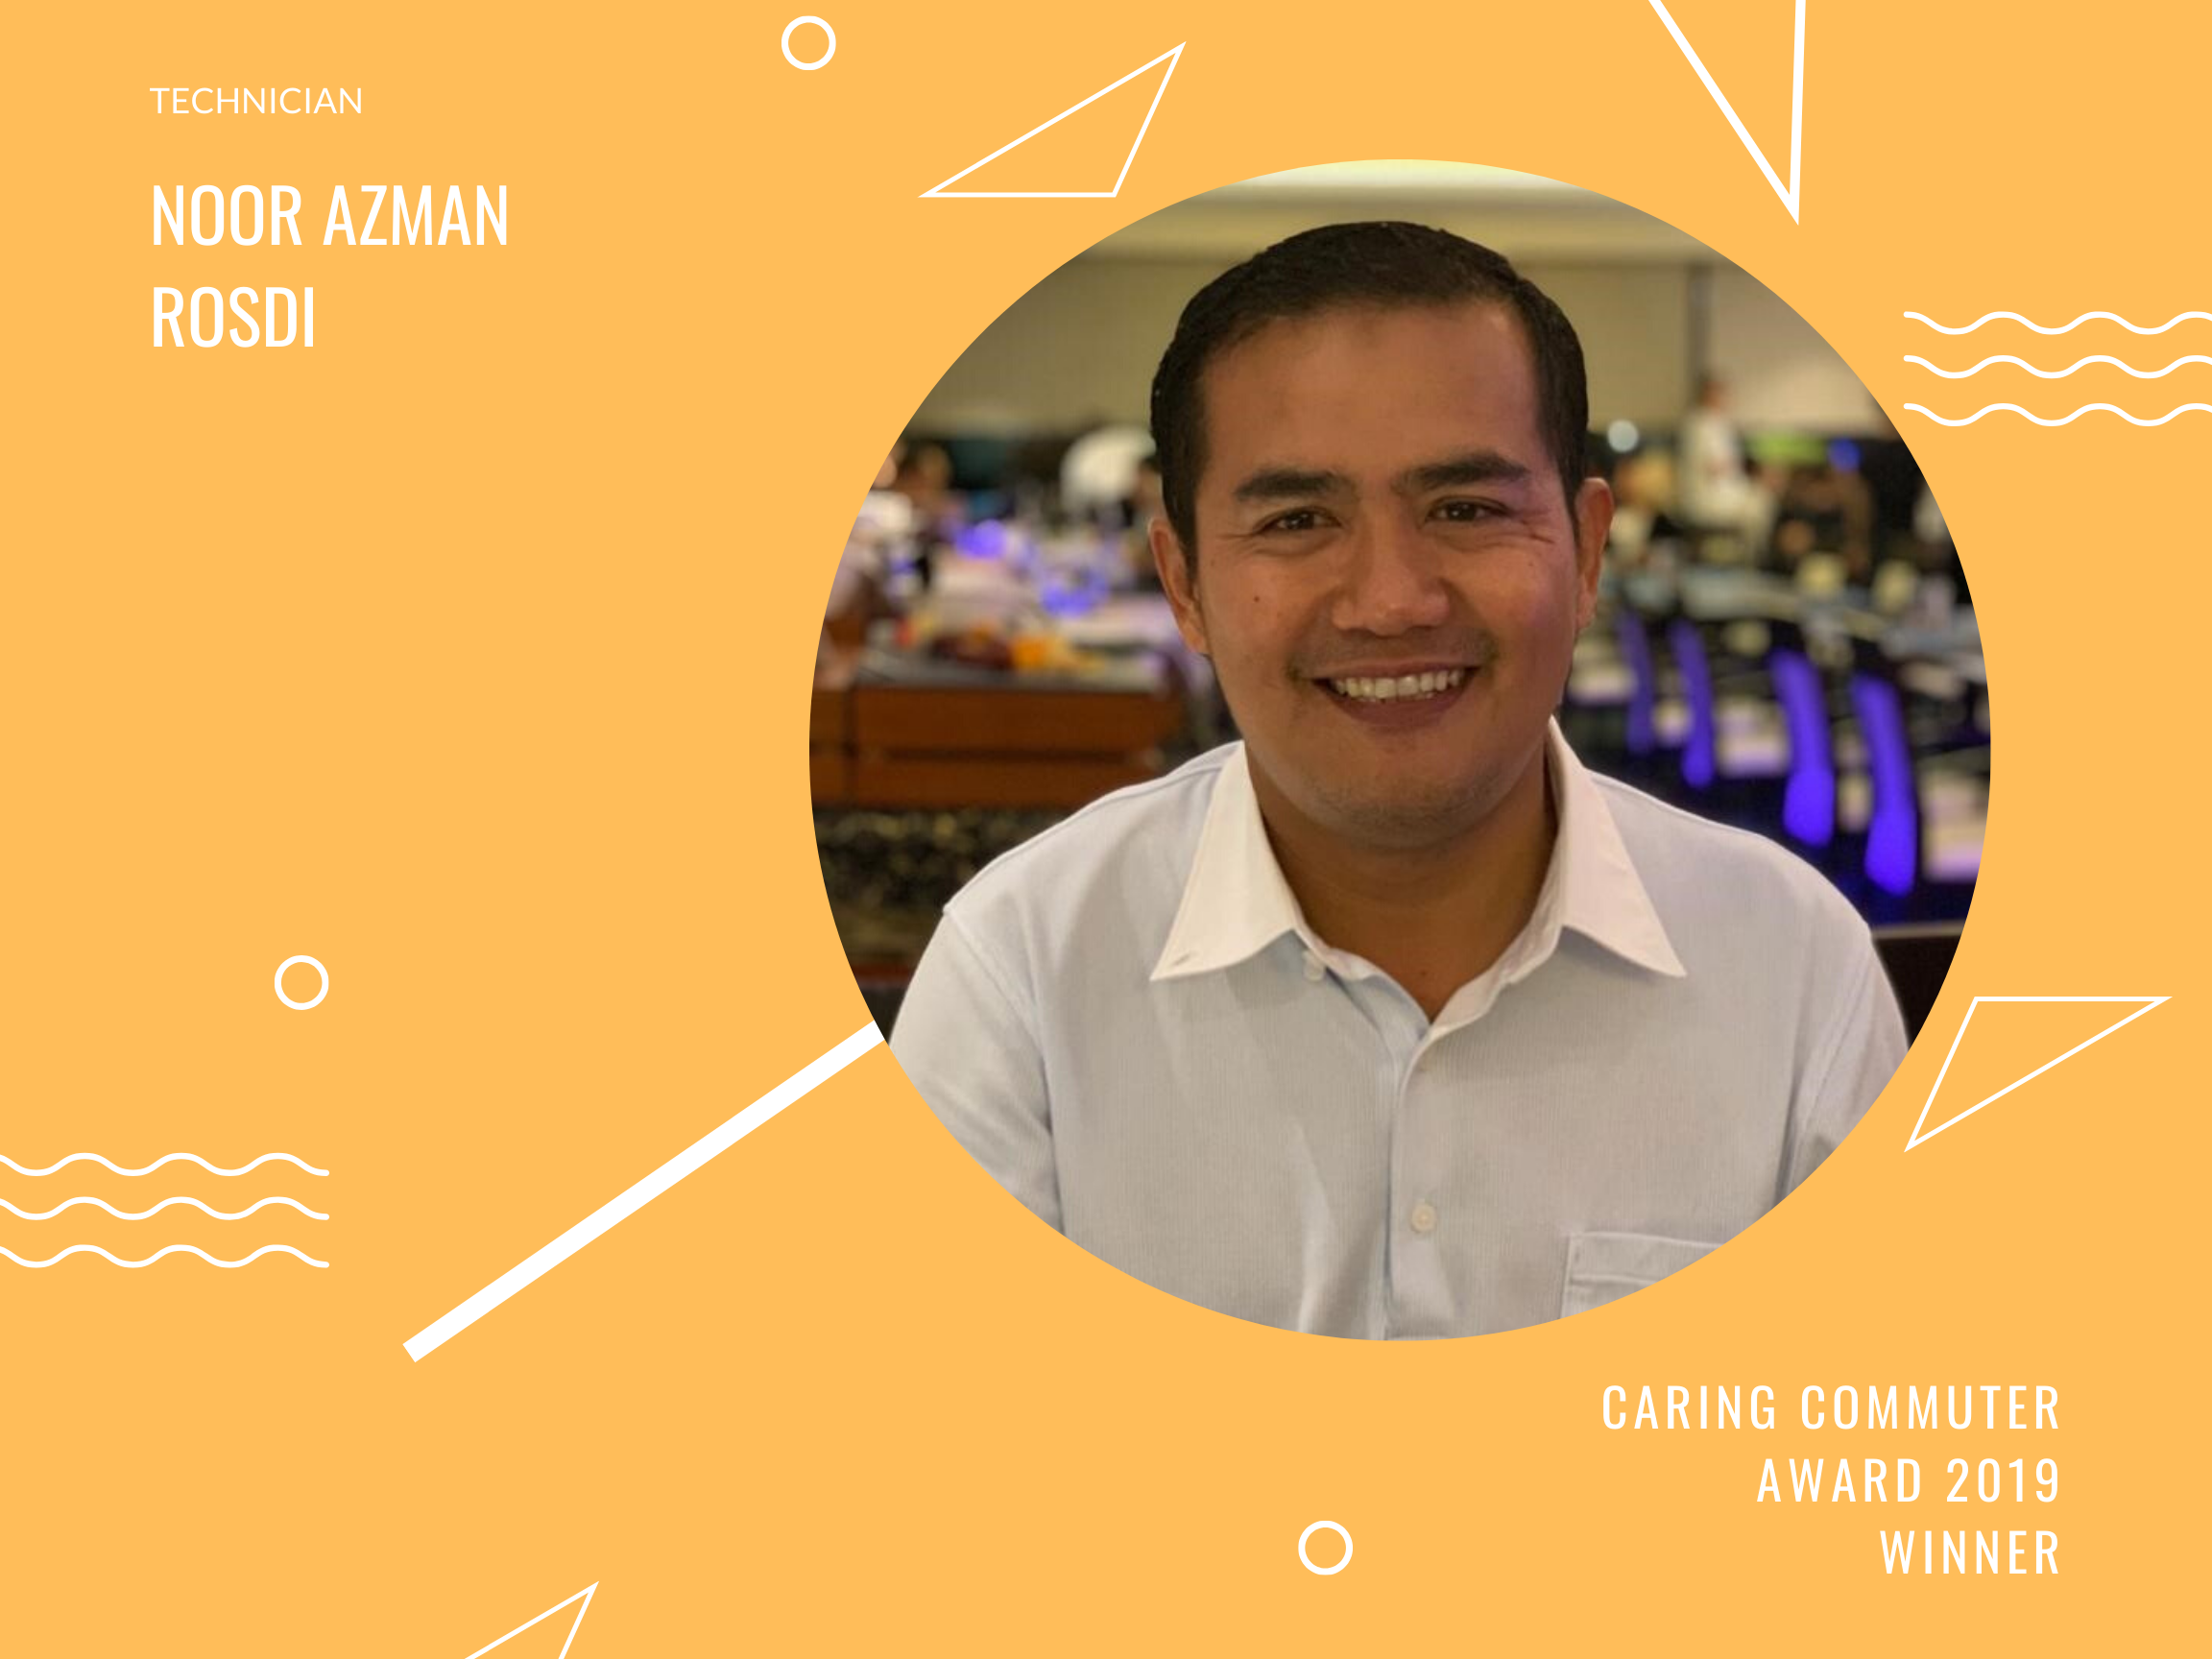 Meet Noor Azman Rosdi, Technician and Caring Commuter Award 2019 Winner